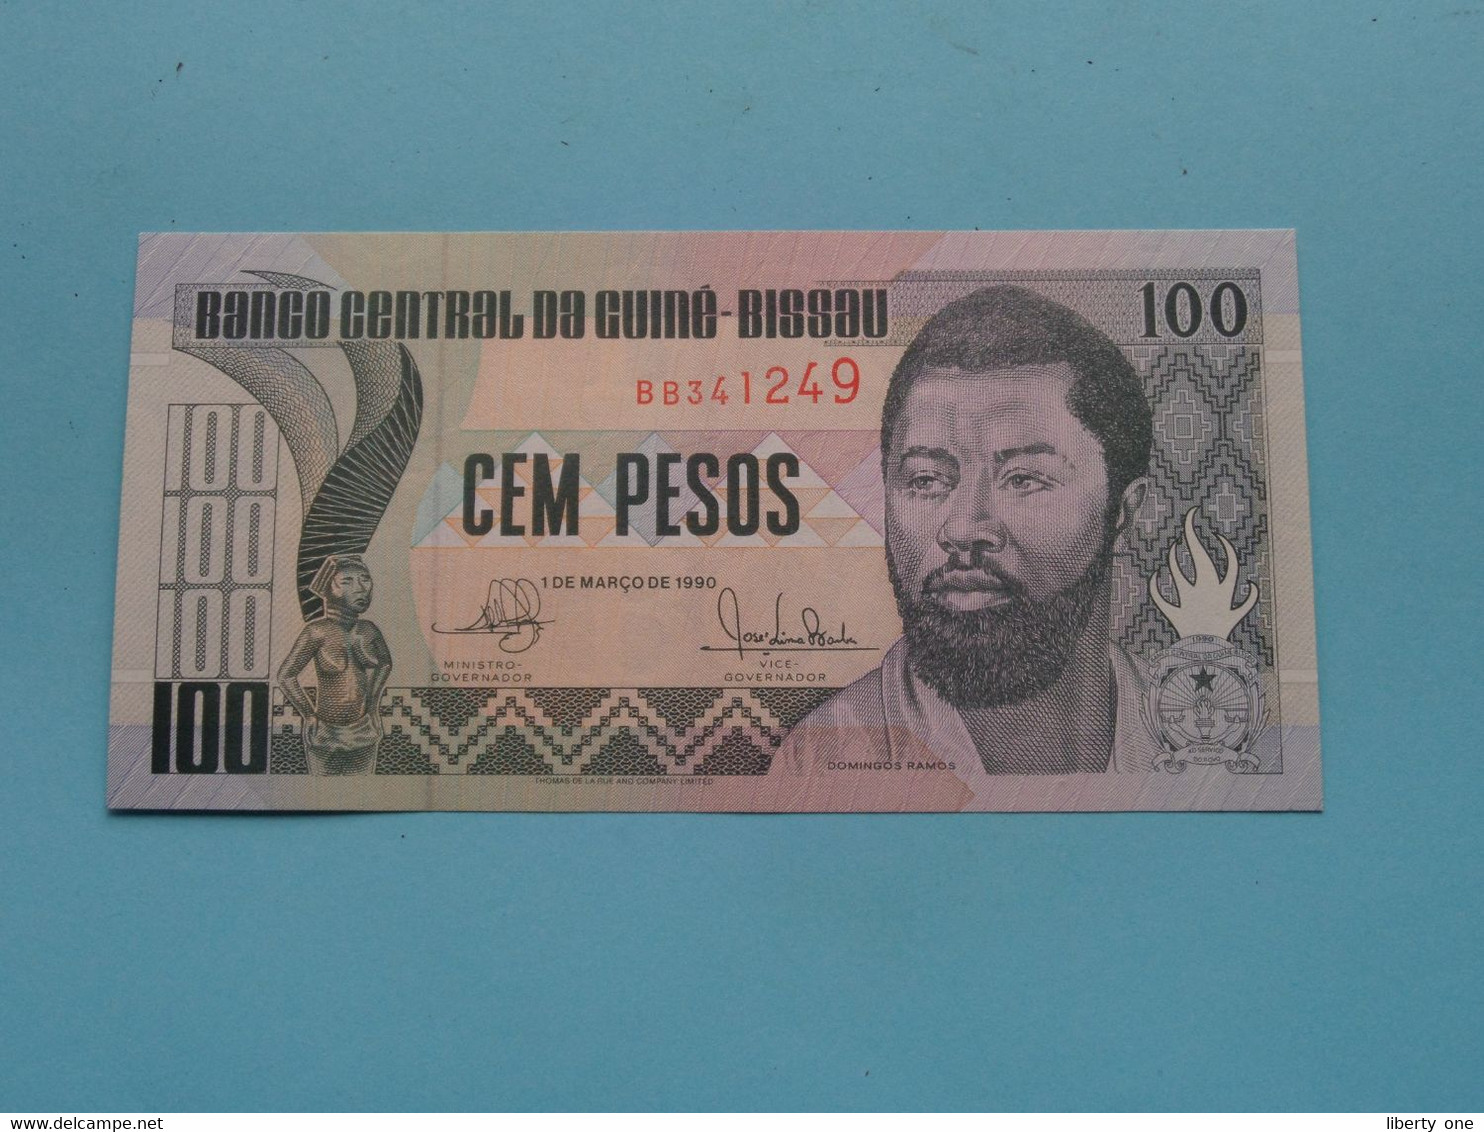 100 (Cem) Pesos (BB341249) 1990 > Banco Central Da Guiné-Bissau ( For Grade, Please See Photo ) UNC ! - Guinee-Bissau